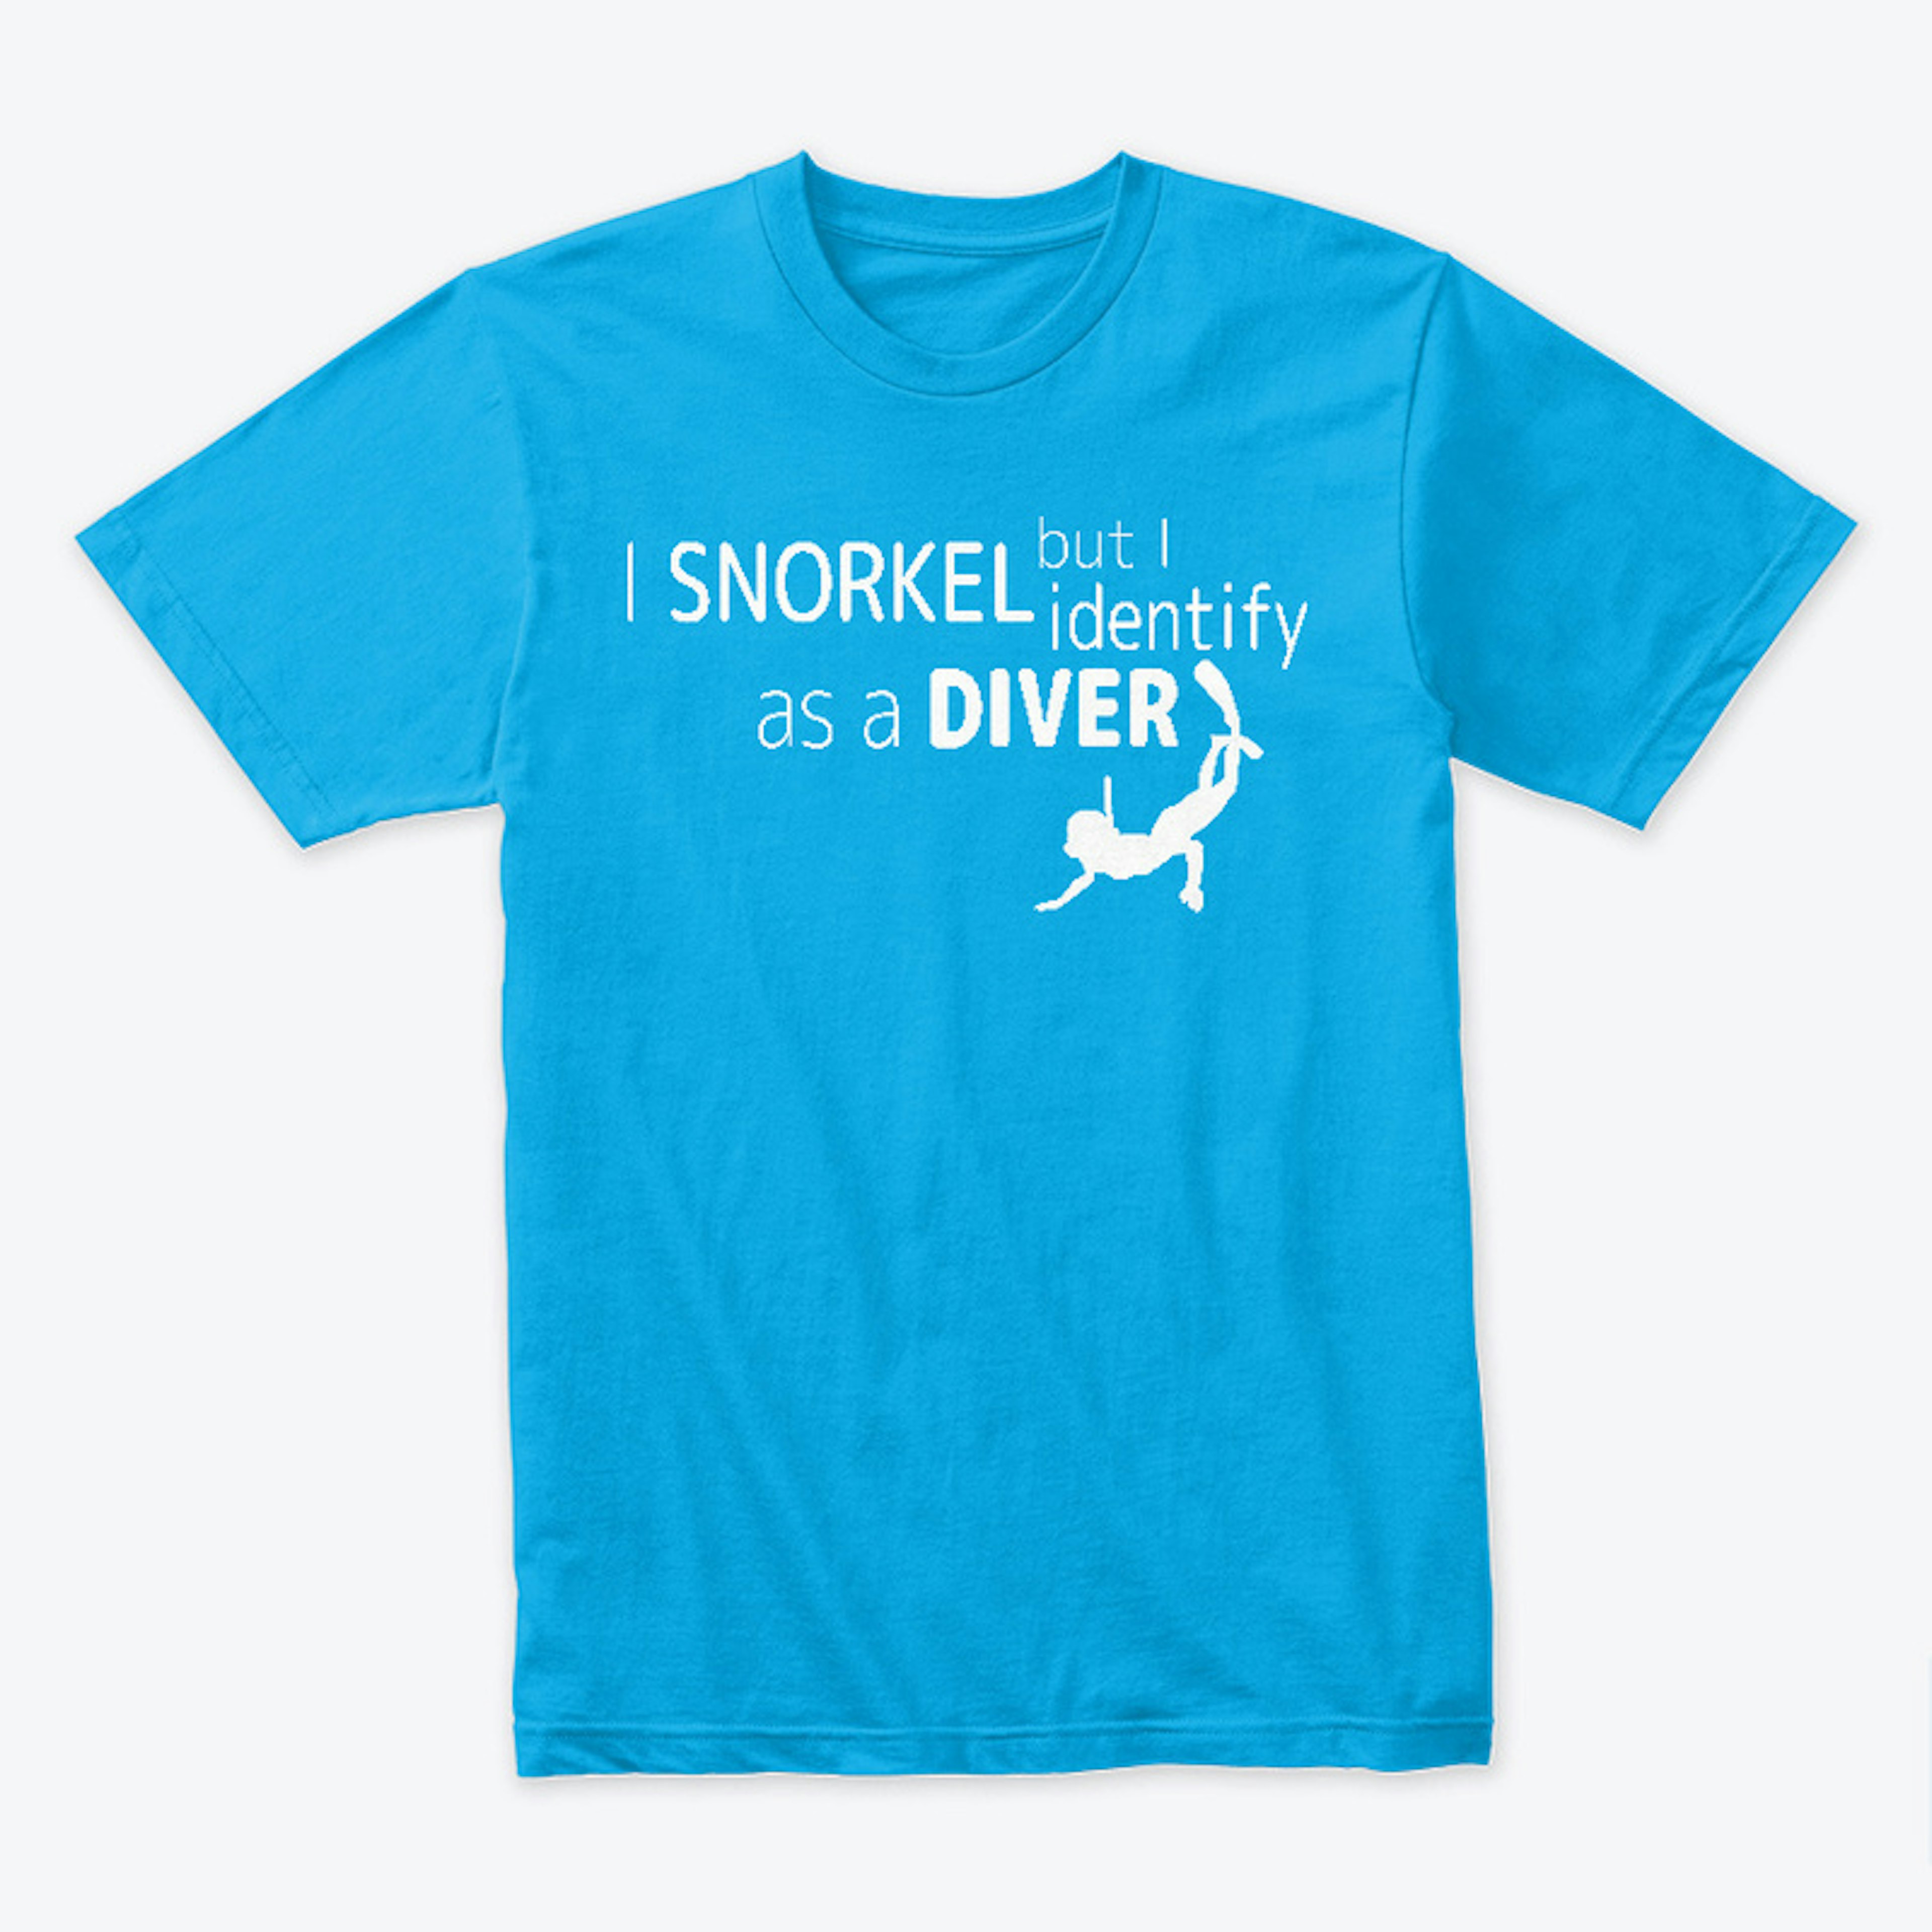 I identify as a Diver